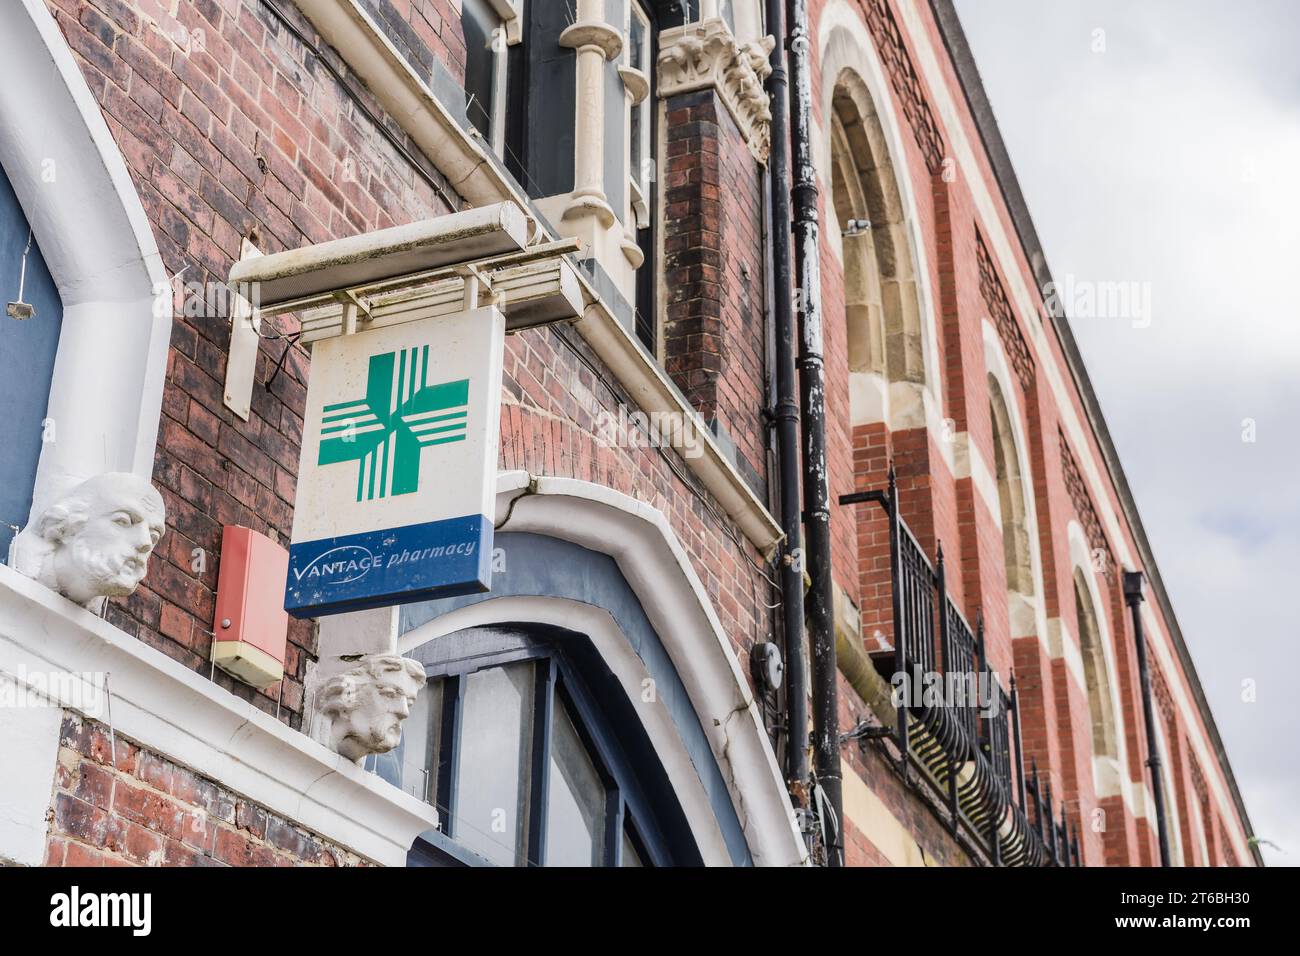 Burslem, Stoke on Trent, England, 21. März 2023. Vantage Pharmacy Signage auf Edwardian Gebäude, Gesundheitswesen und Eigentum redaktionelle Illustration. Stockfoto